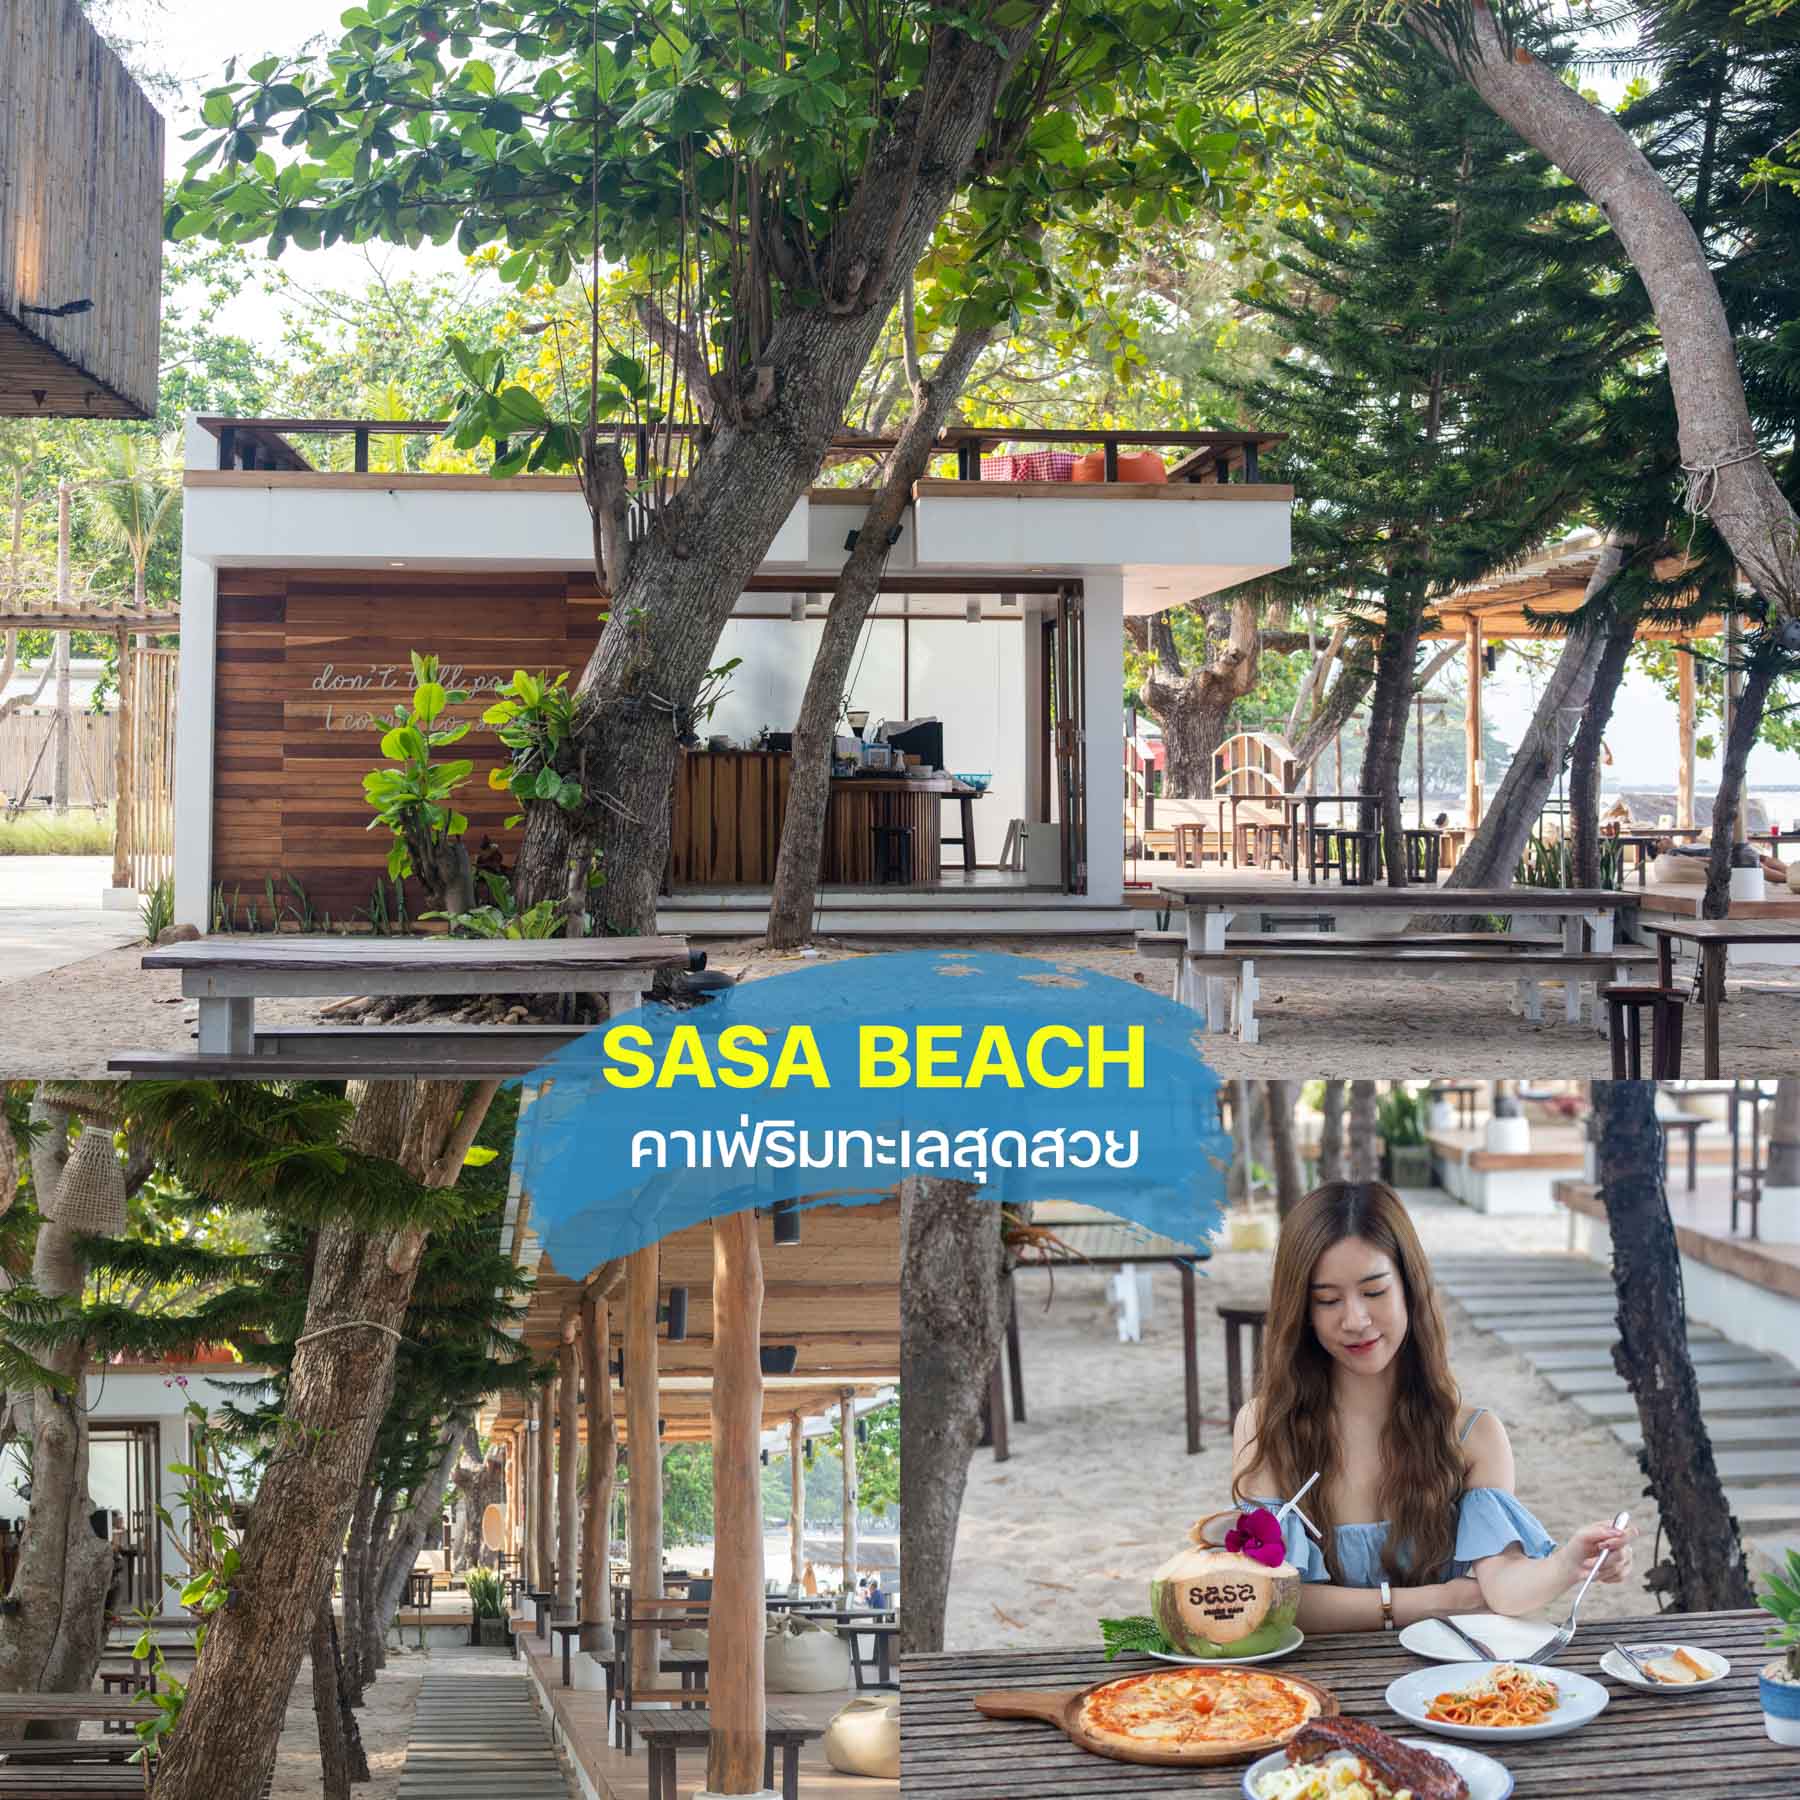 SASA-Beach-Sichon SASA-Beach-Sichon-คาเฟ่สุดสวยนั่งชิวริมทะเล-มีหลากหลายโซนทั้งโซนนั่งบีนแบค-โซนนั่งทานอาหาร-โซนดาดฟ้า-จิบกาแฟ-Afternoon-Tea-สบายๆอาหารมีหลากหลายรูปแบบทั้งไทย-อเมริกัน-เครื่องดื่ม-เบเกอรี่-ต้องลองน้าา อิสระบีชรีสอร์ท,ที่พักสิชล,ที่พักใกล้วัดเจดีย์,SASABEACH,SAABSAAB